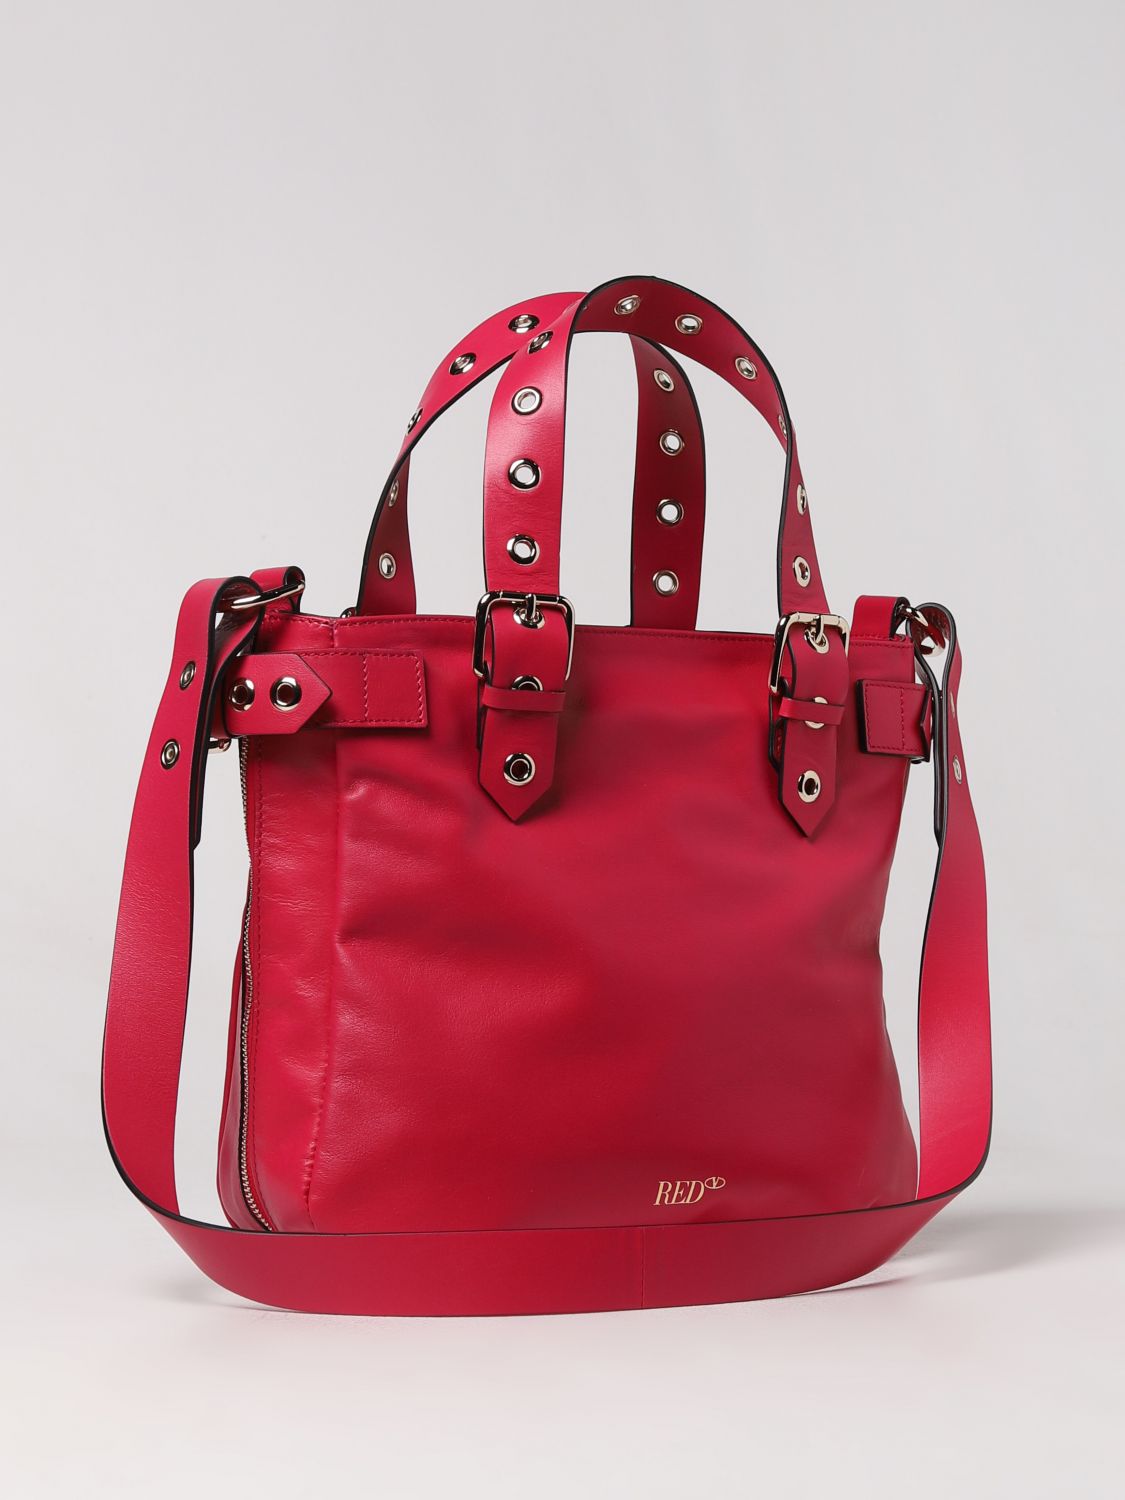 Handbag Red(V): Red(V) handbag for women red 2